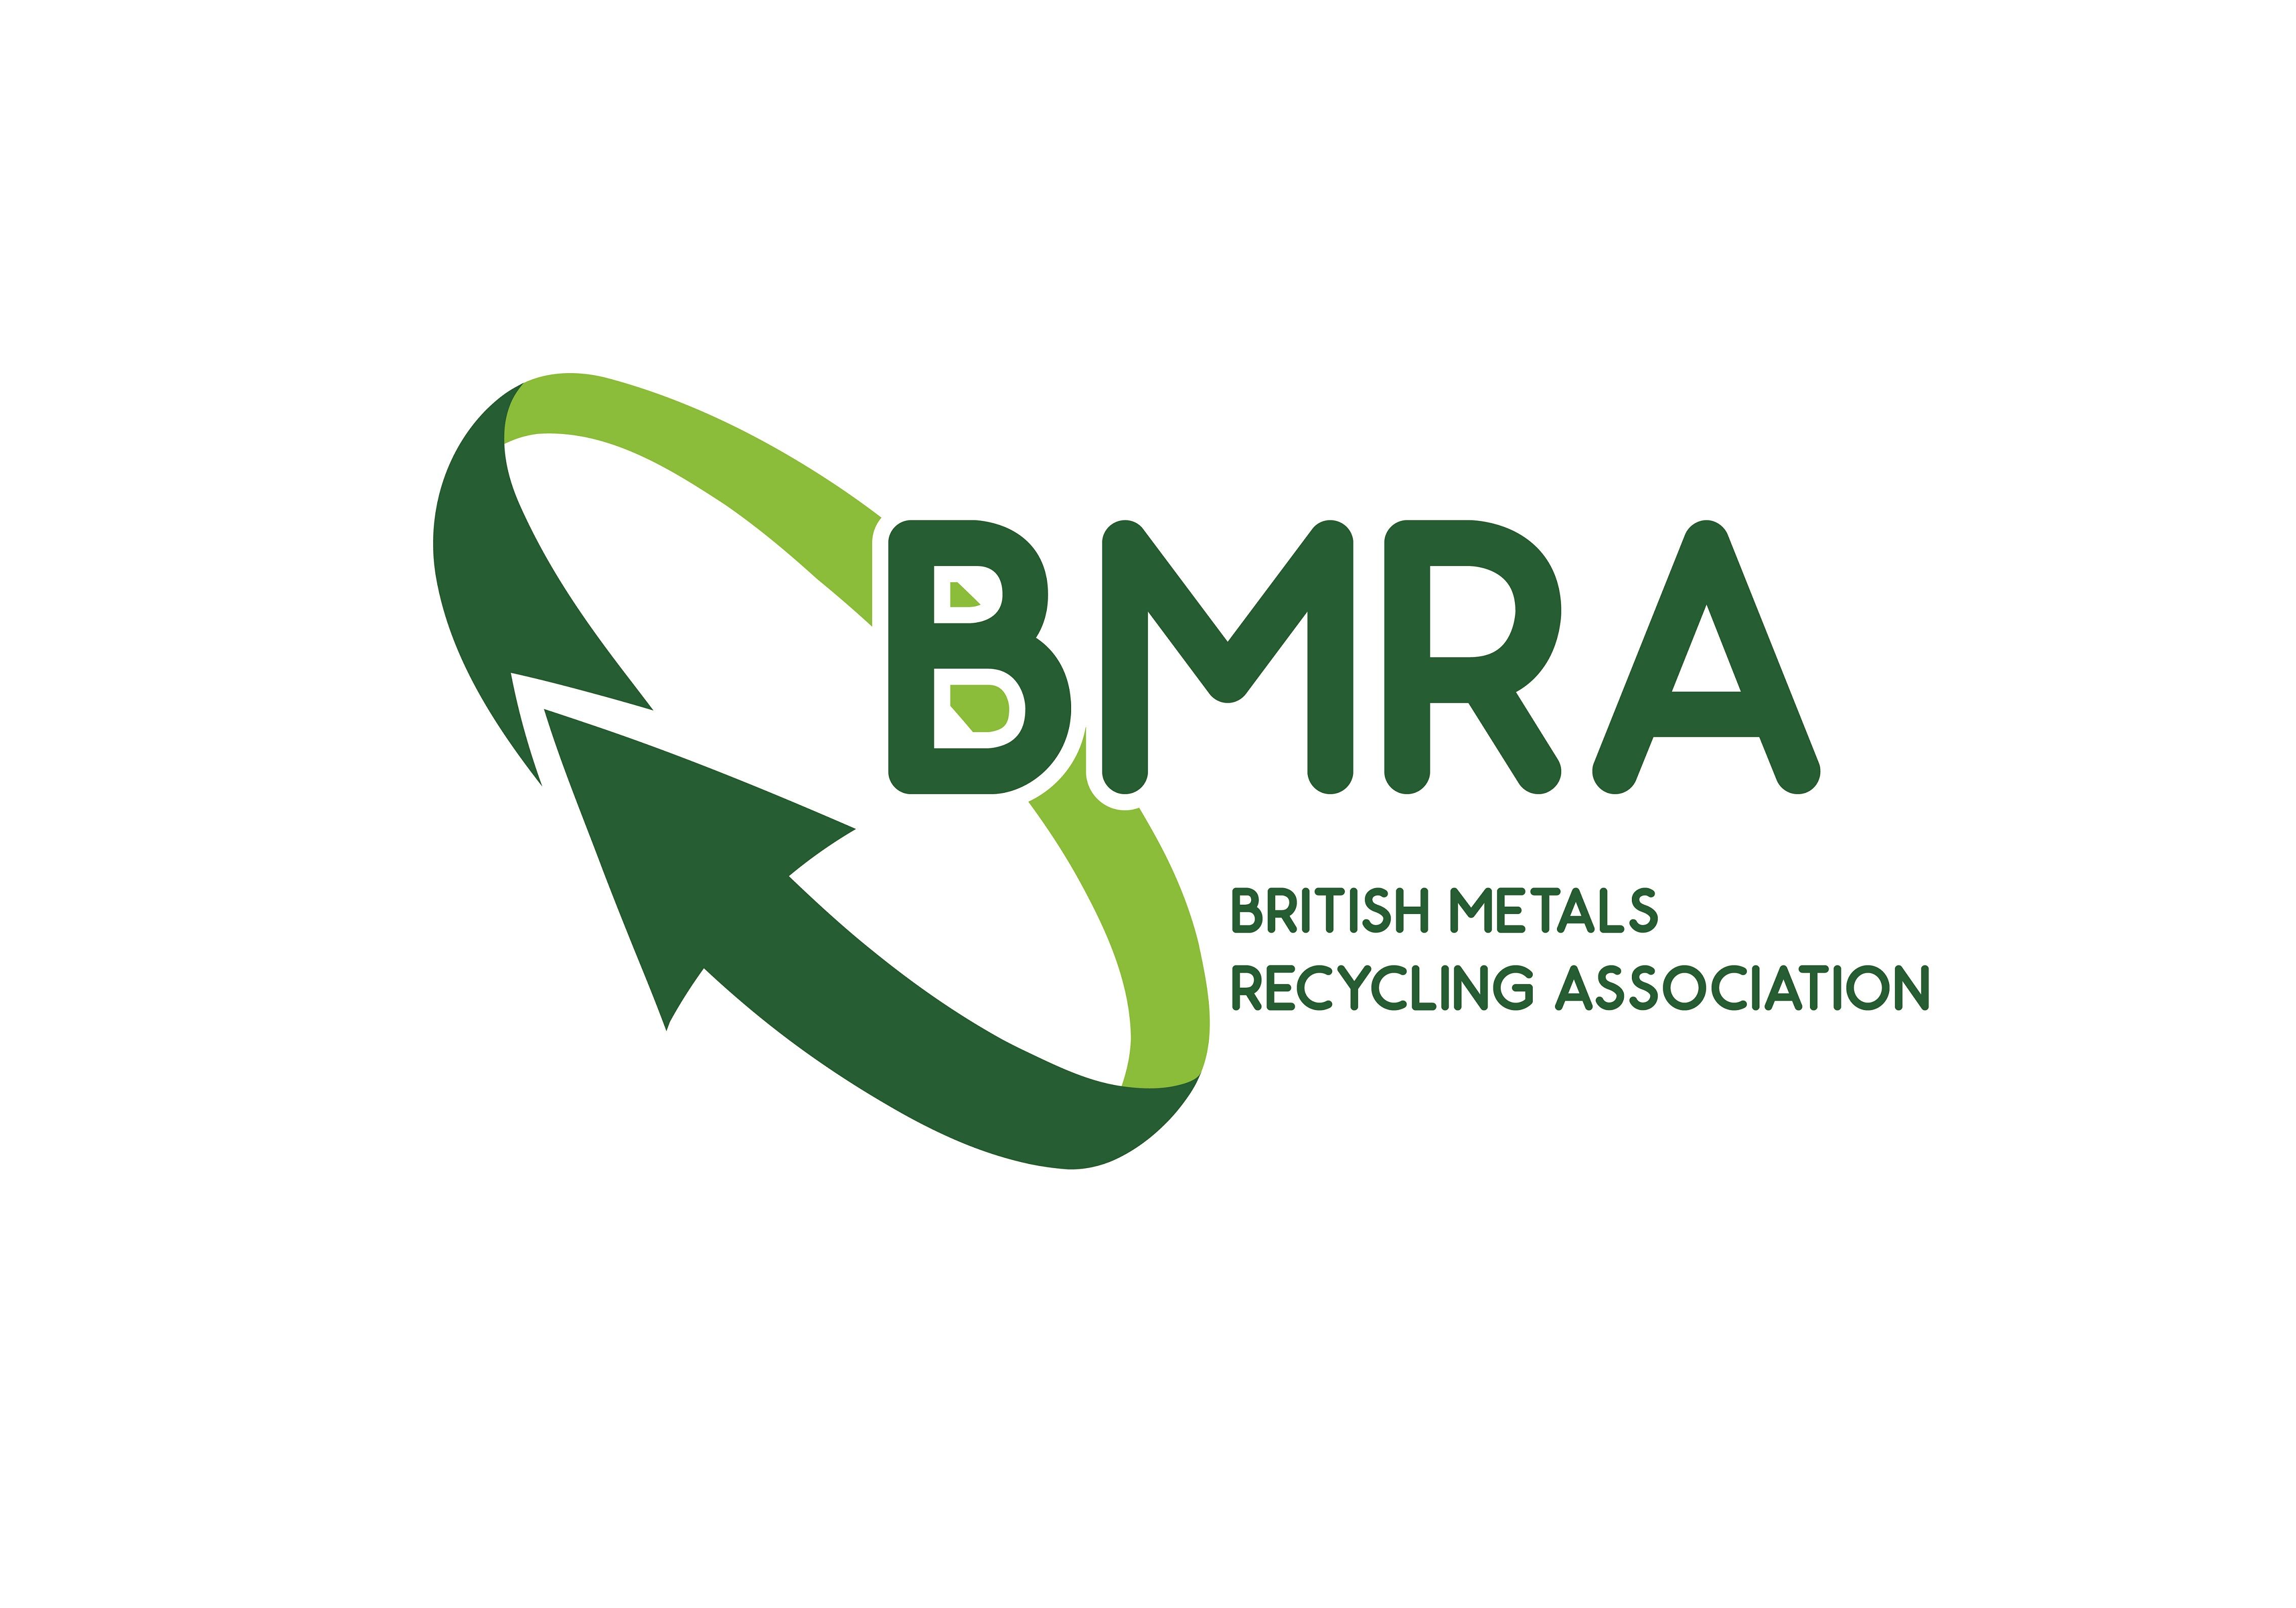 British Metals Recycling Association